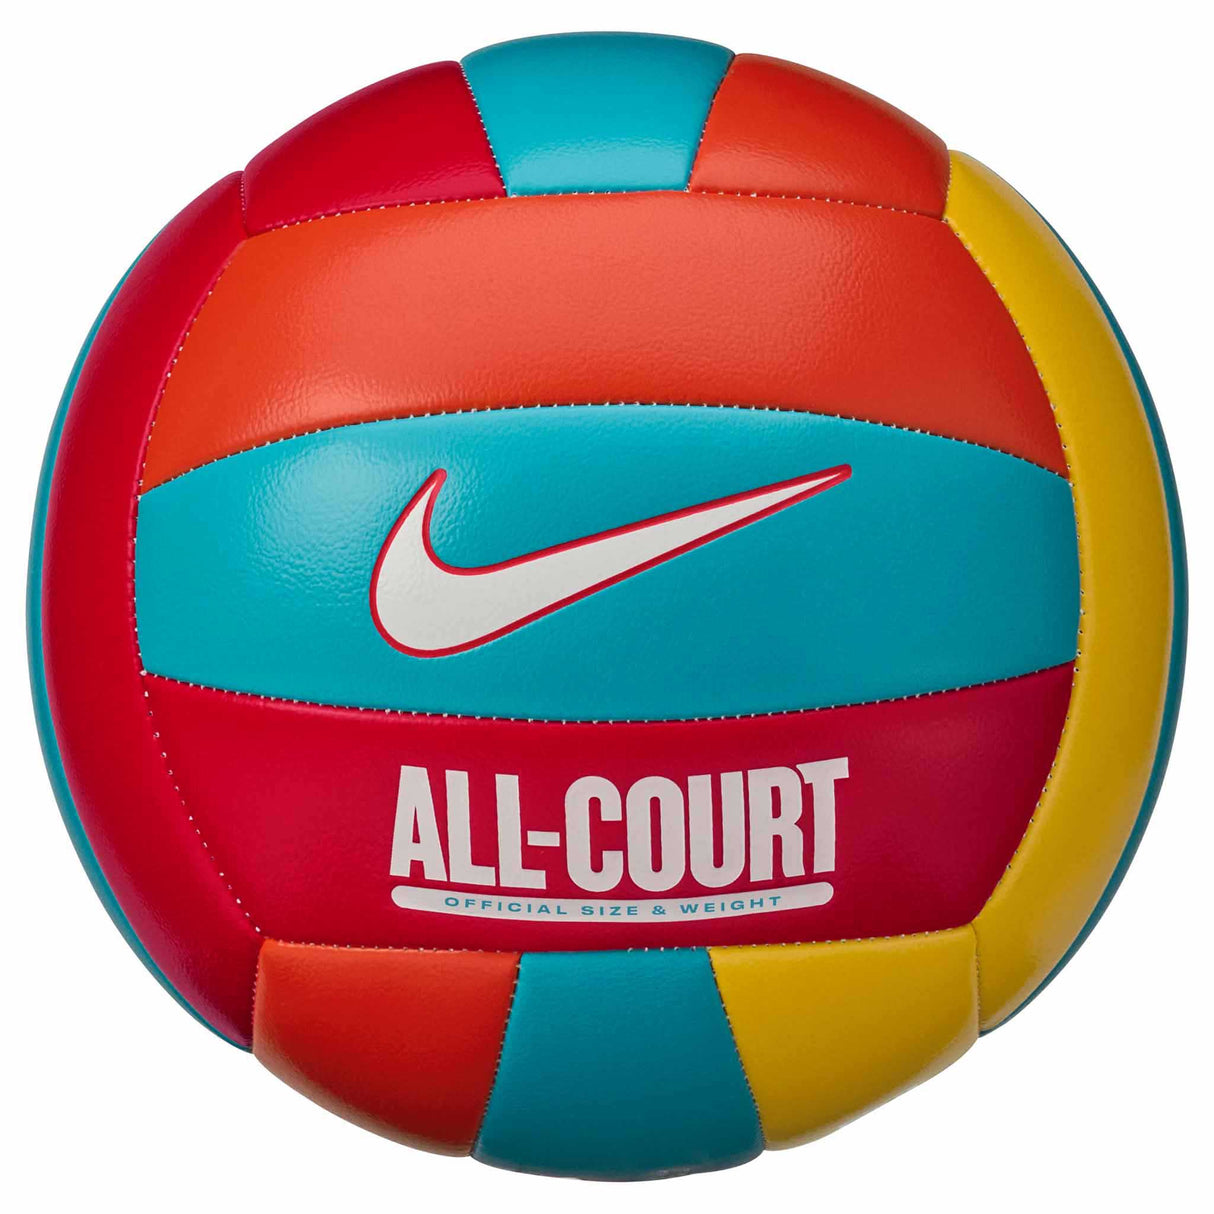 Nike All Court ballon de volleyball - University Red / Teal Nebula / University Gold / White - dos